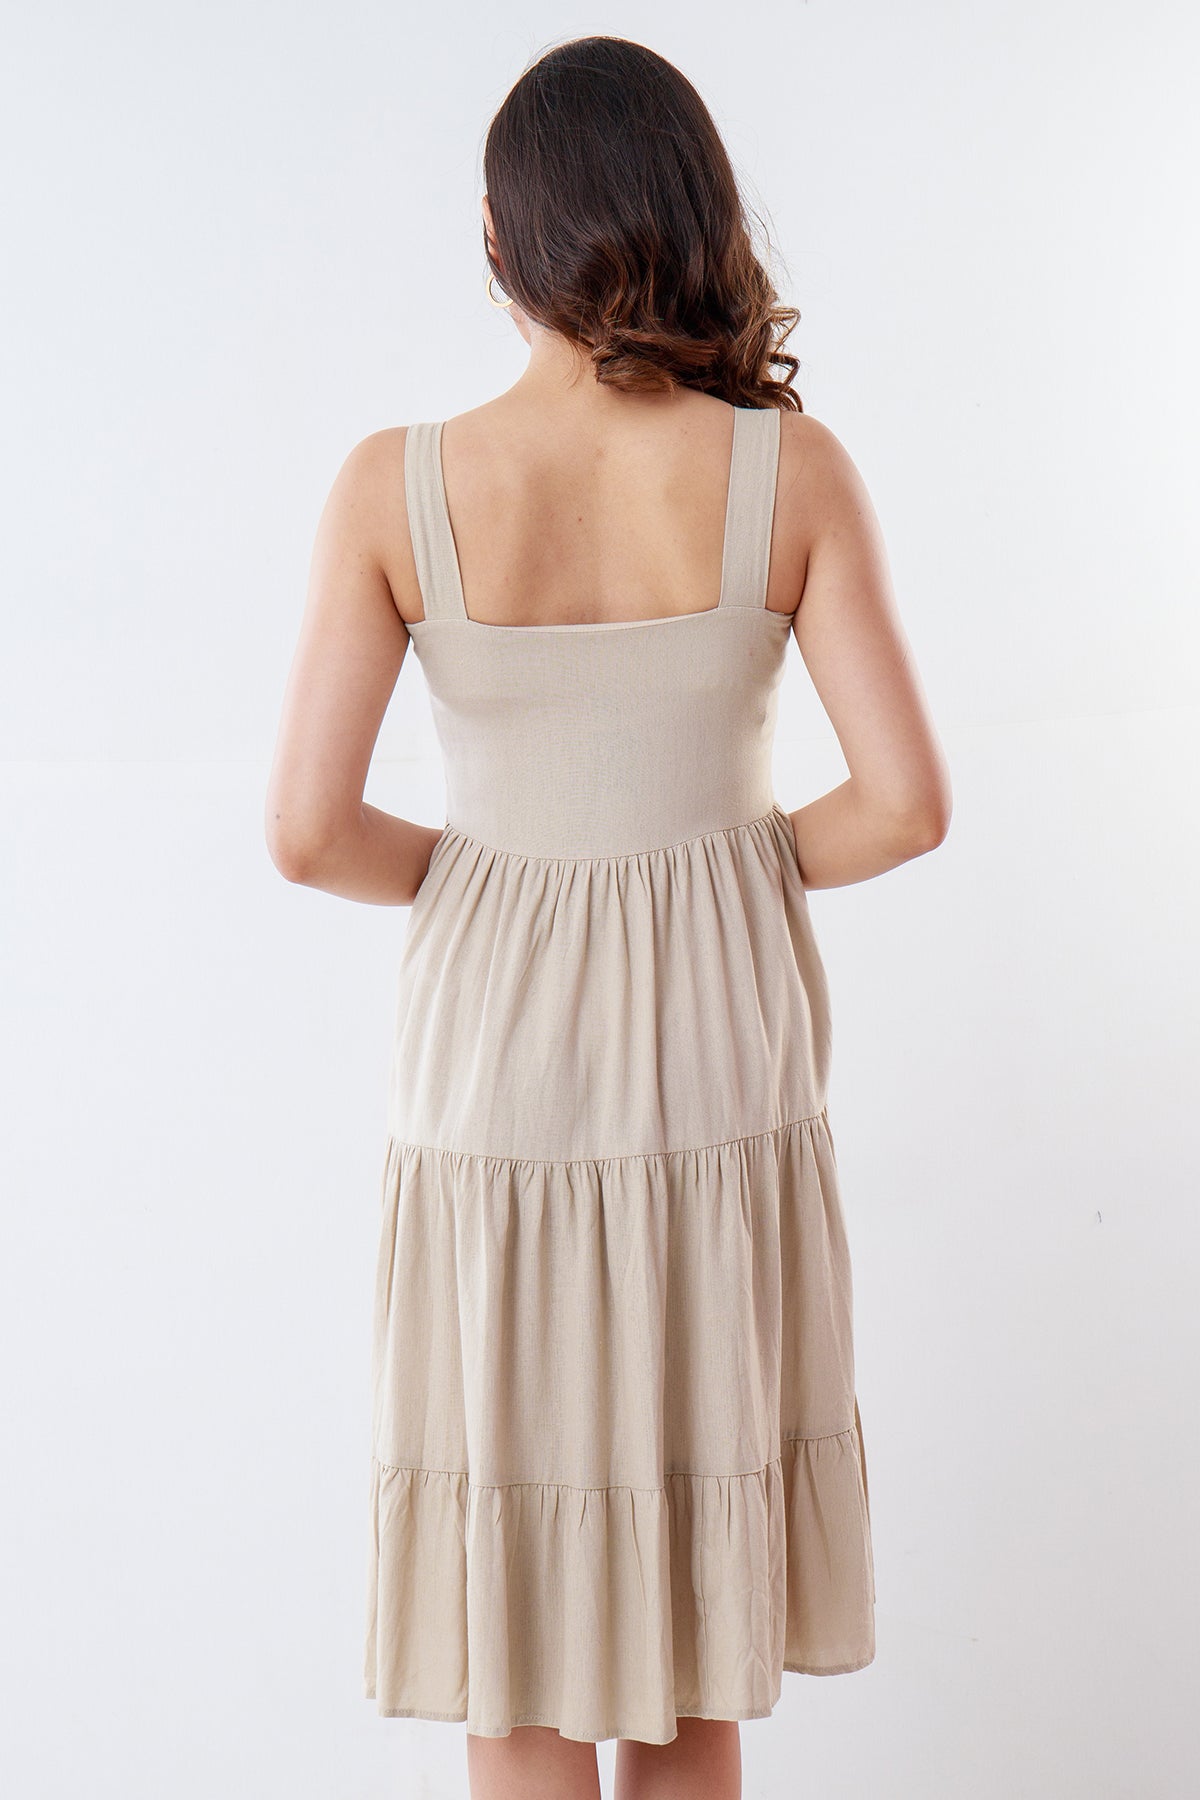 Modano Women's Casual Linen Dress